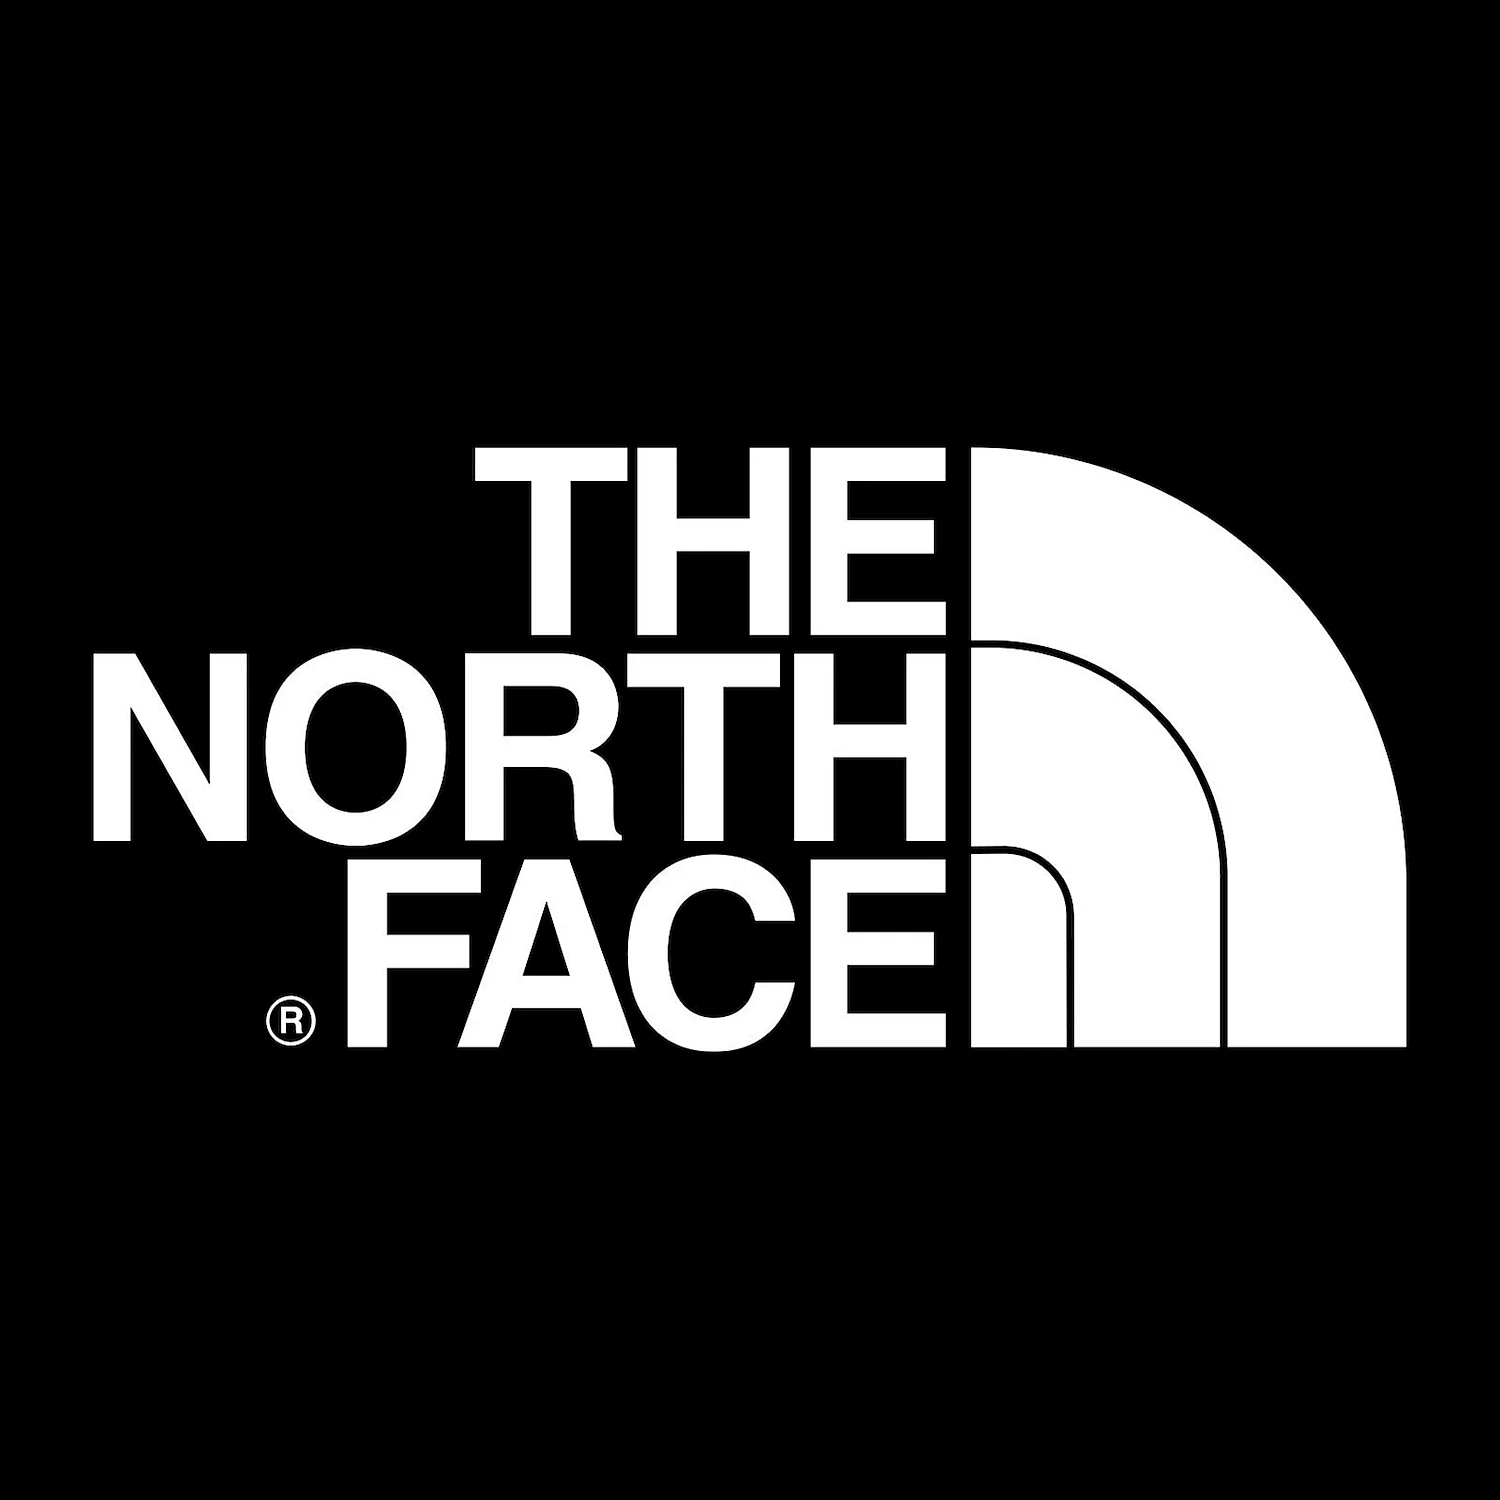 The North face эмблема